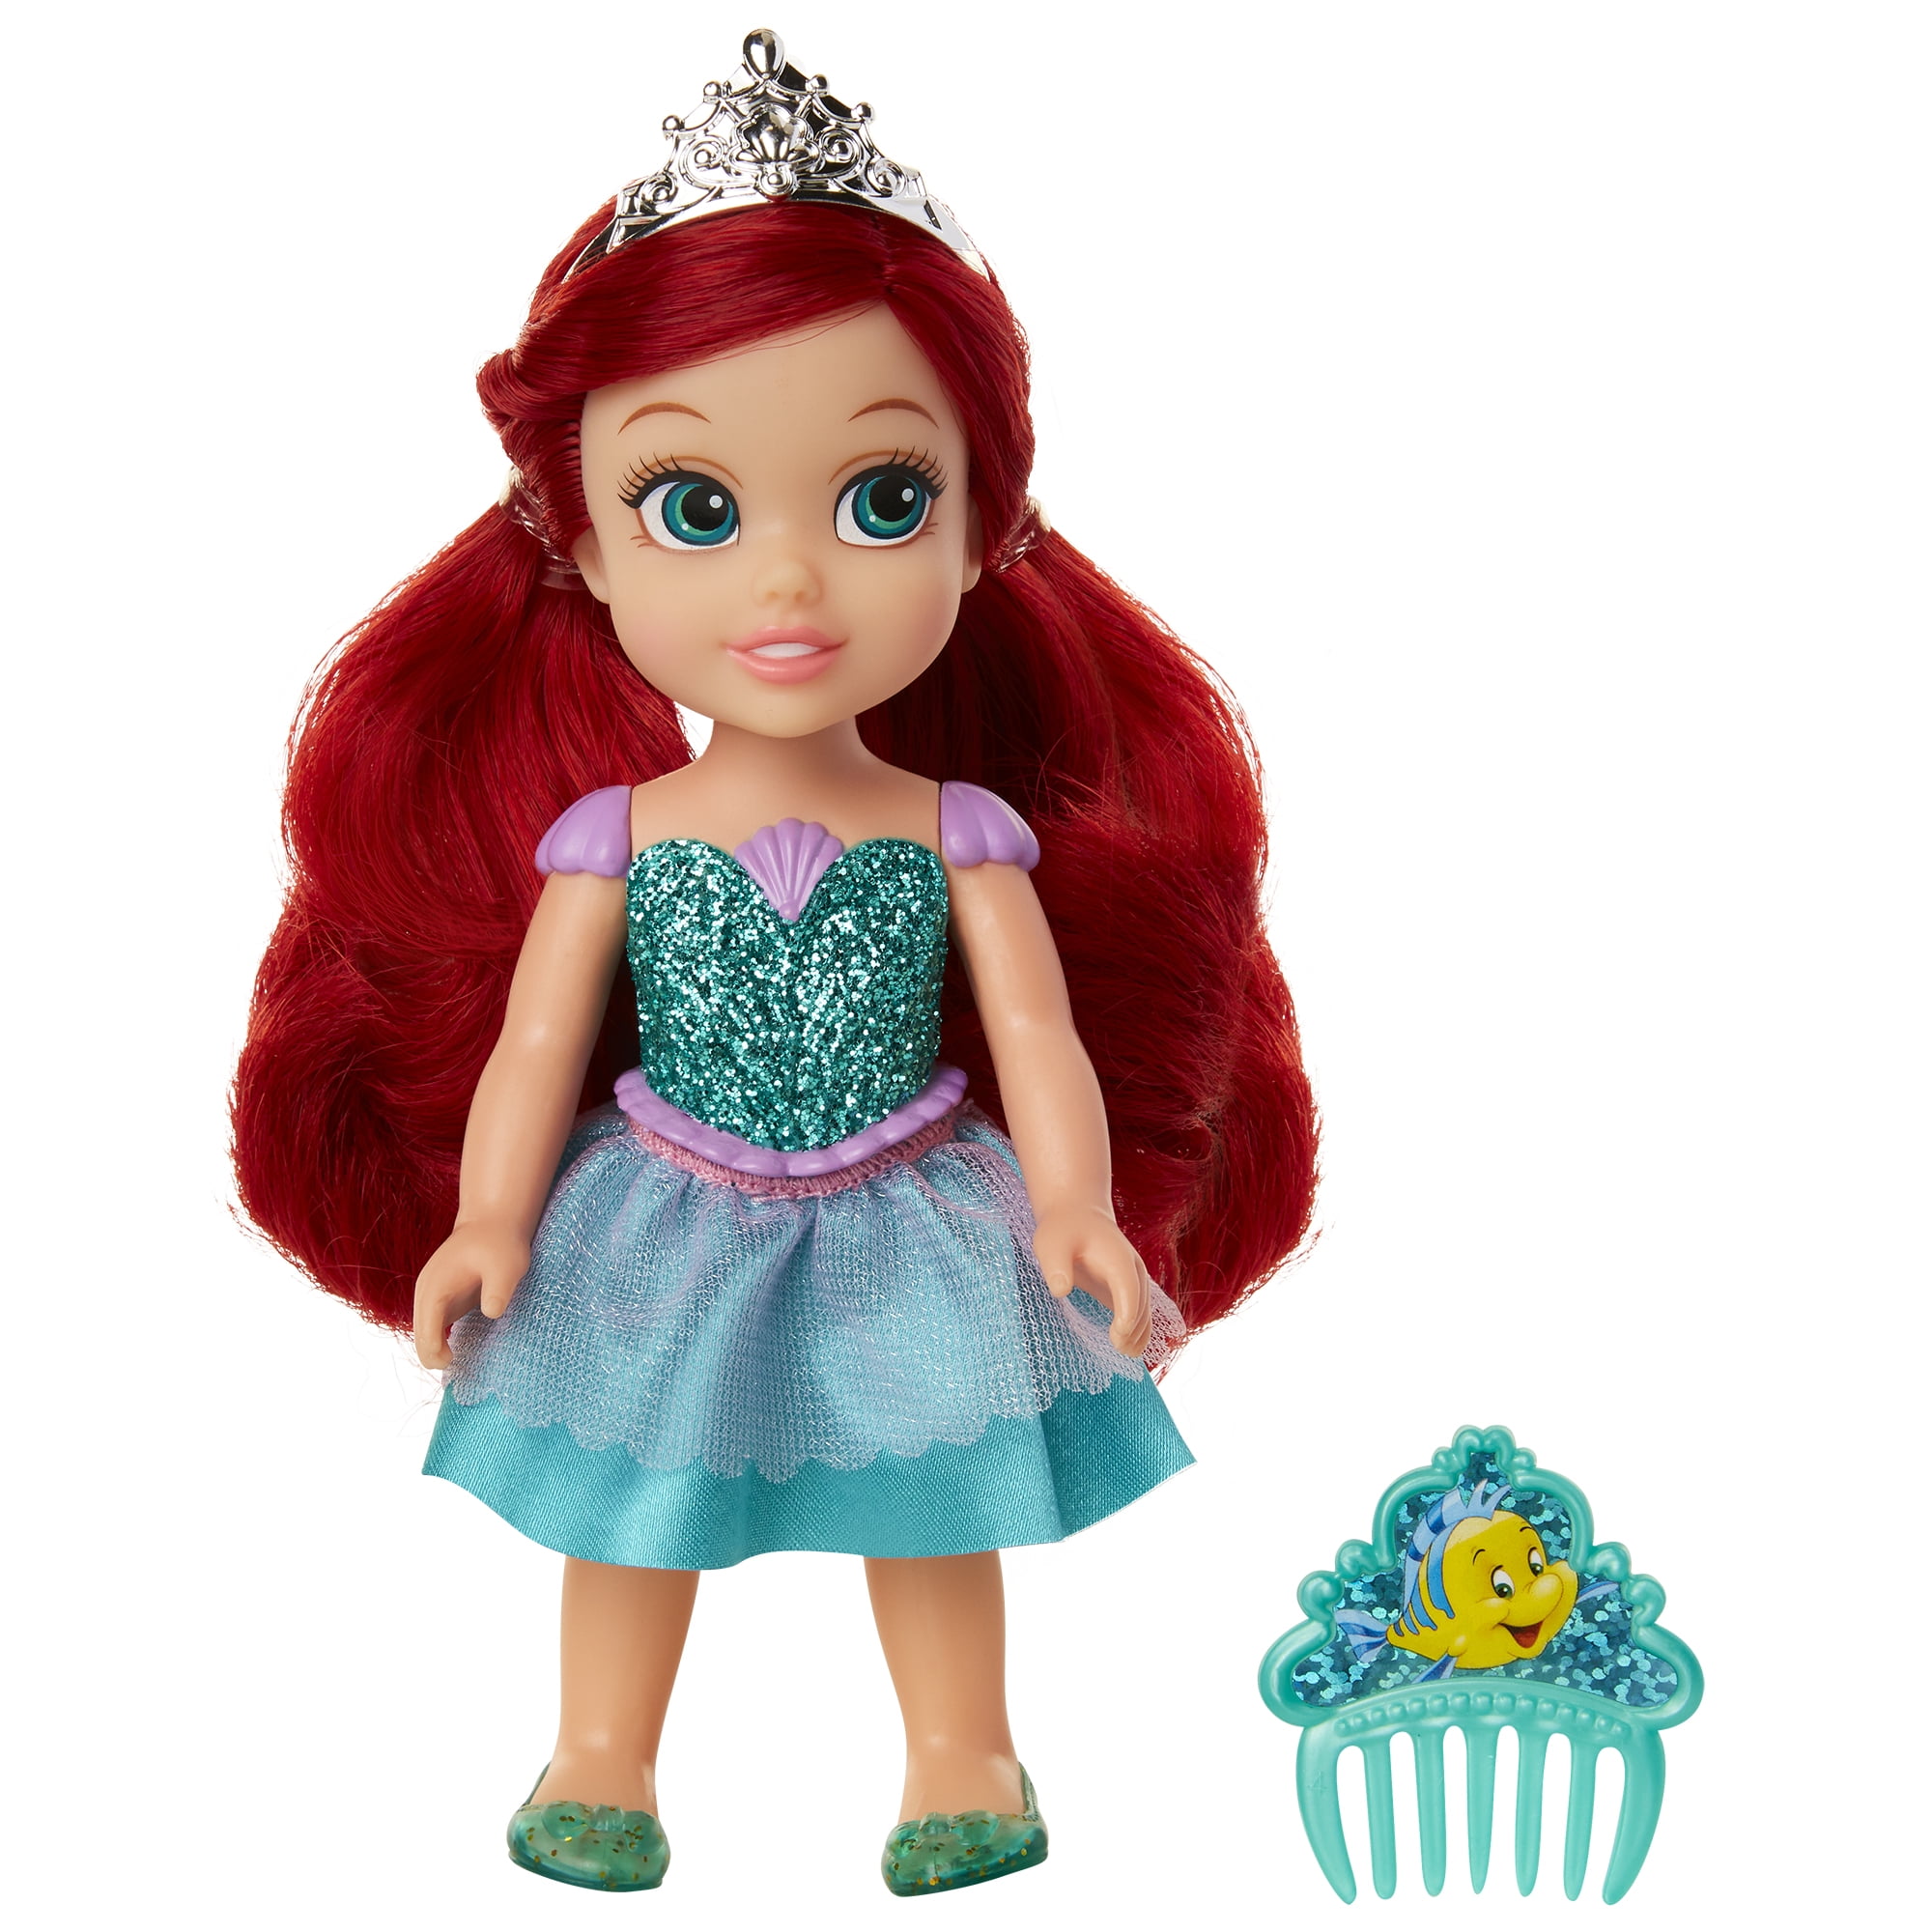 Hard To Find ! NEW* Disney Princess Petite Rapunzel Doll 